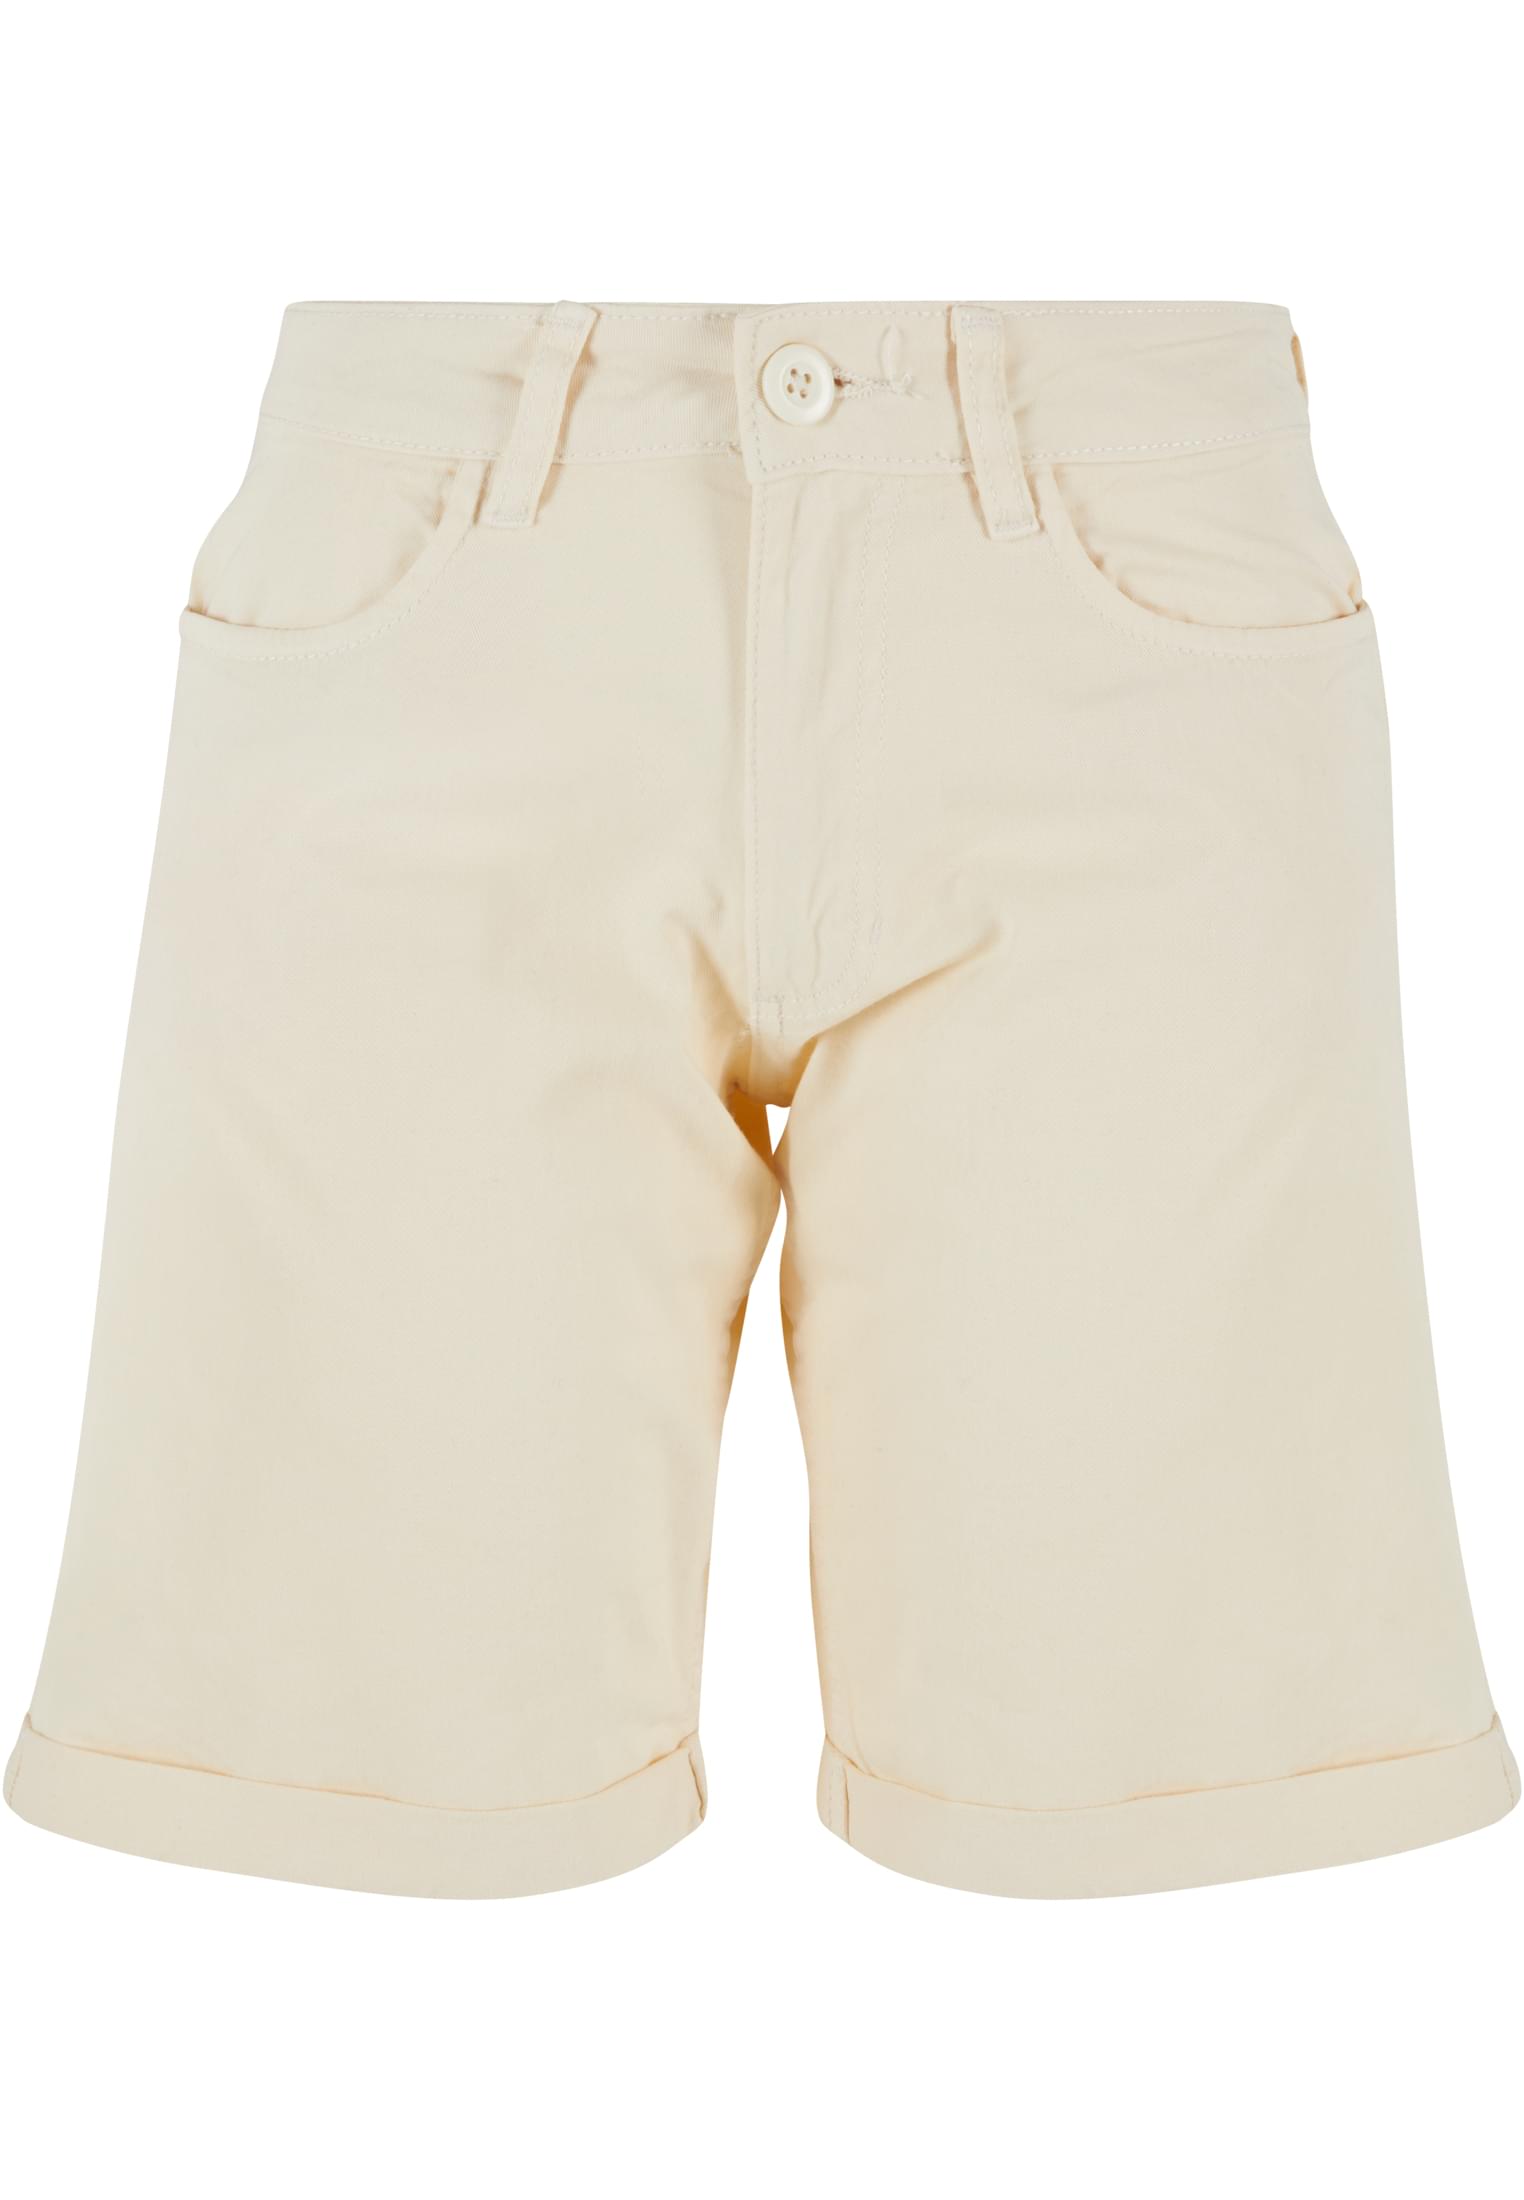 Women's Organic Cotton Bermuda Trousers - Beige